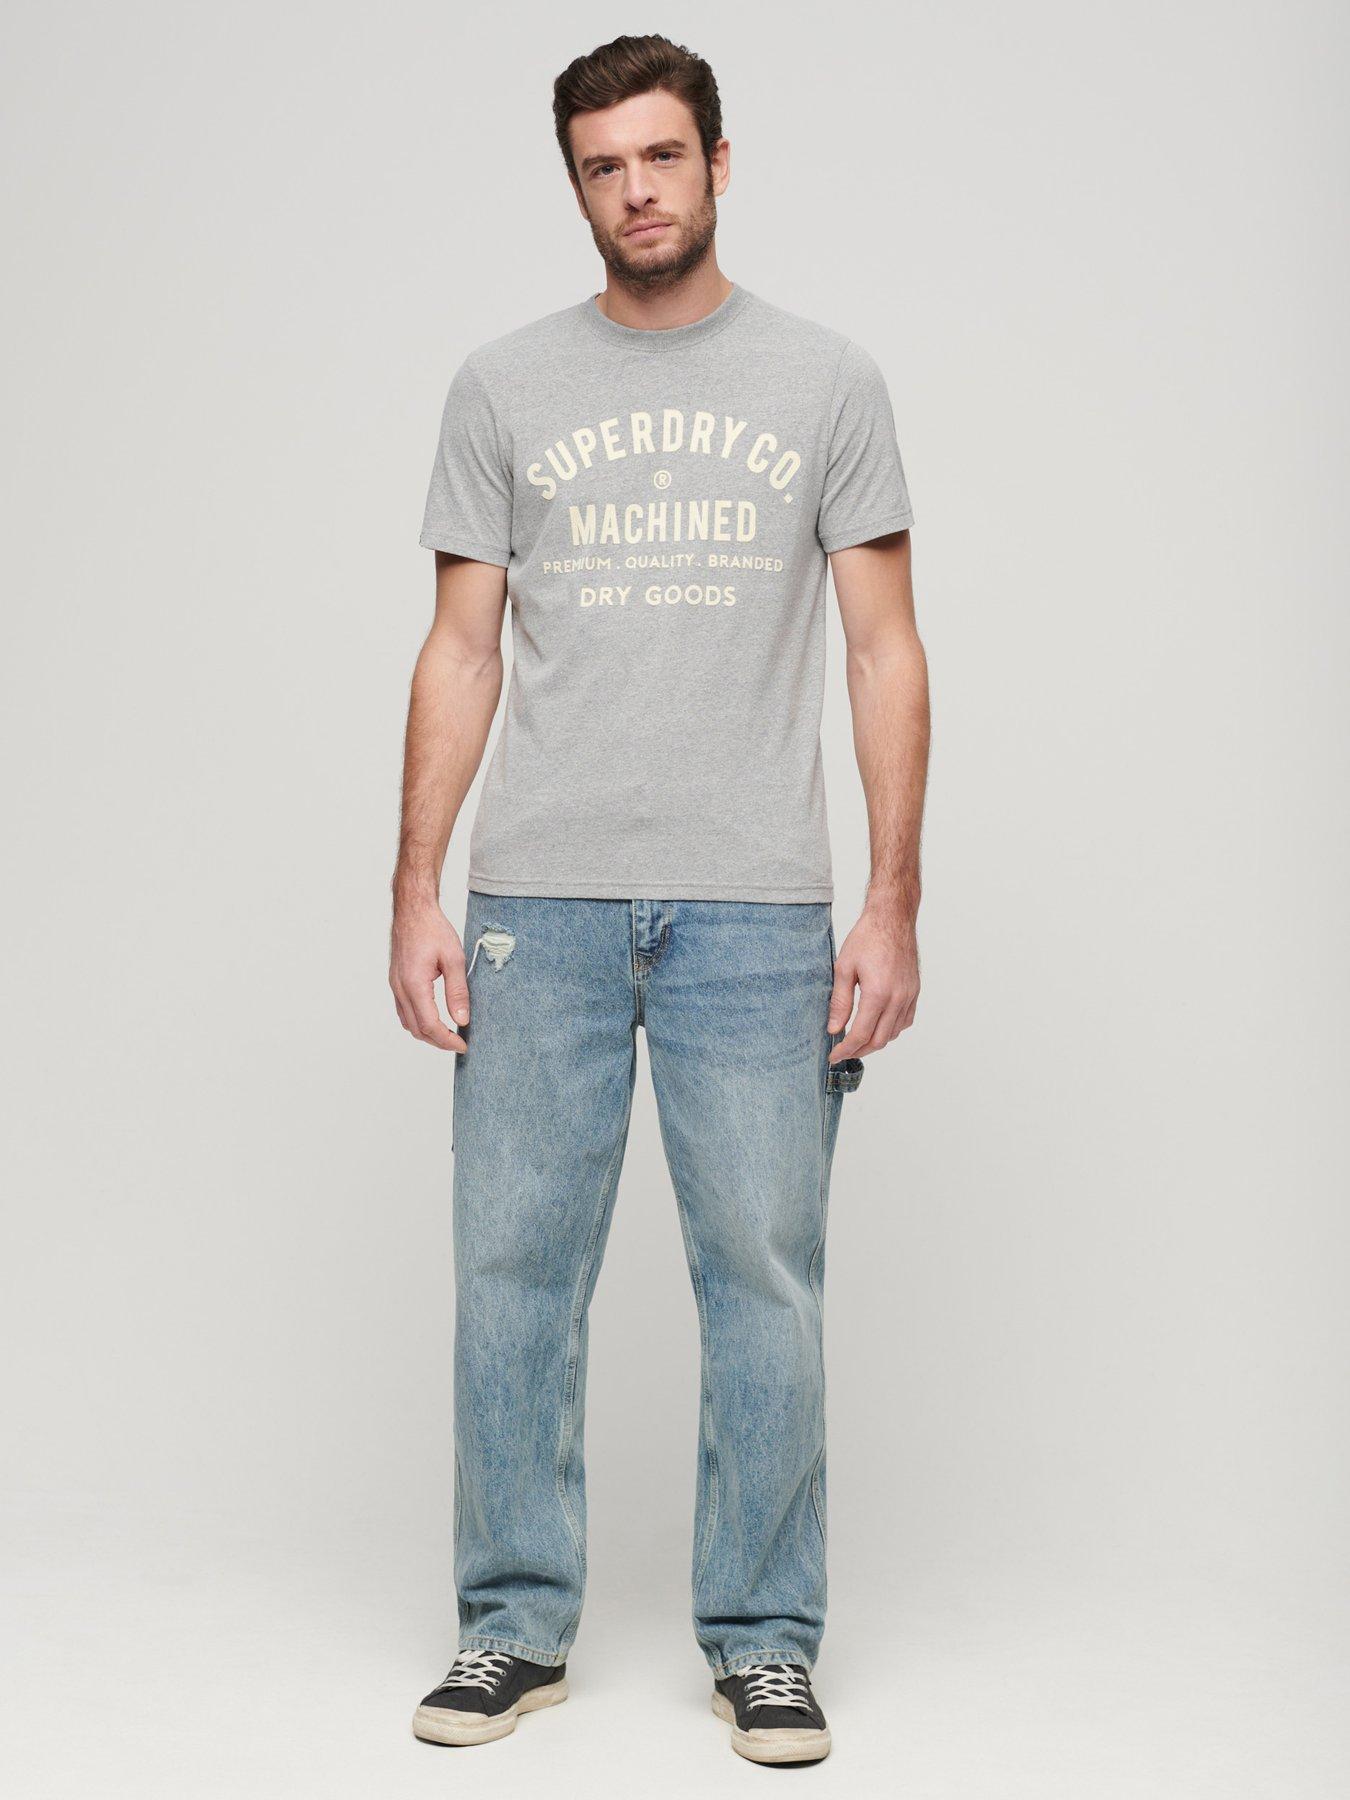 Superdry Superdry Workwear Flocked Logo Graphic T-shirt - Light Grey